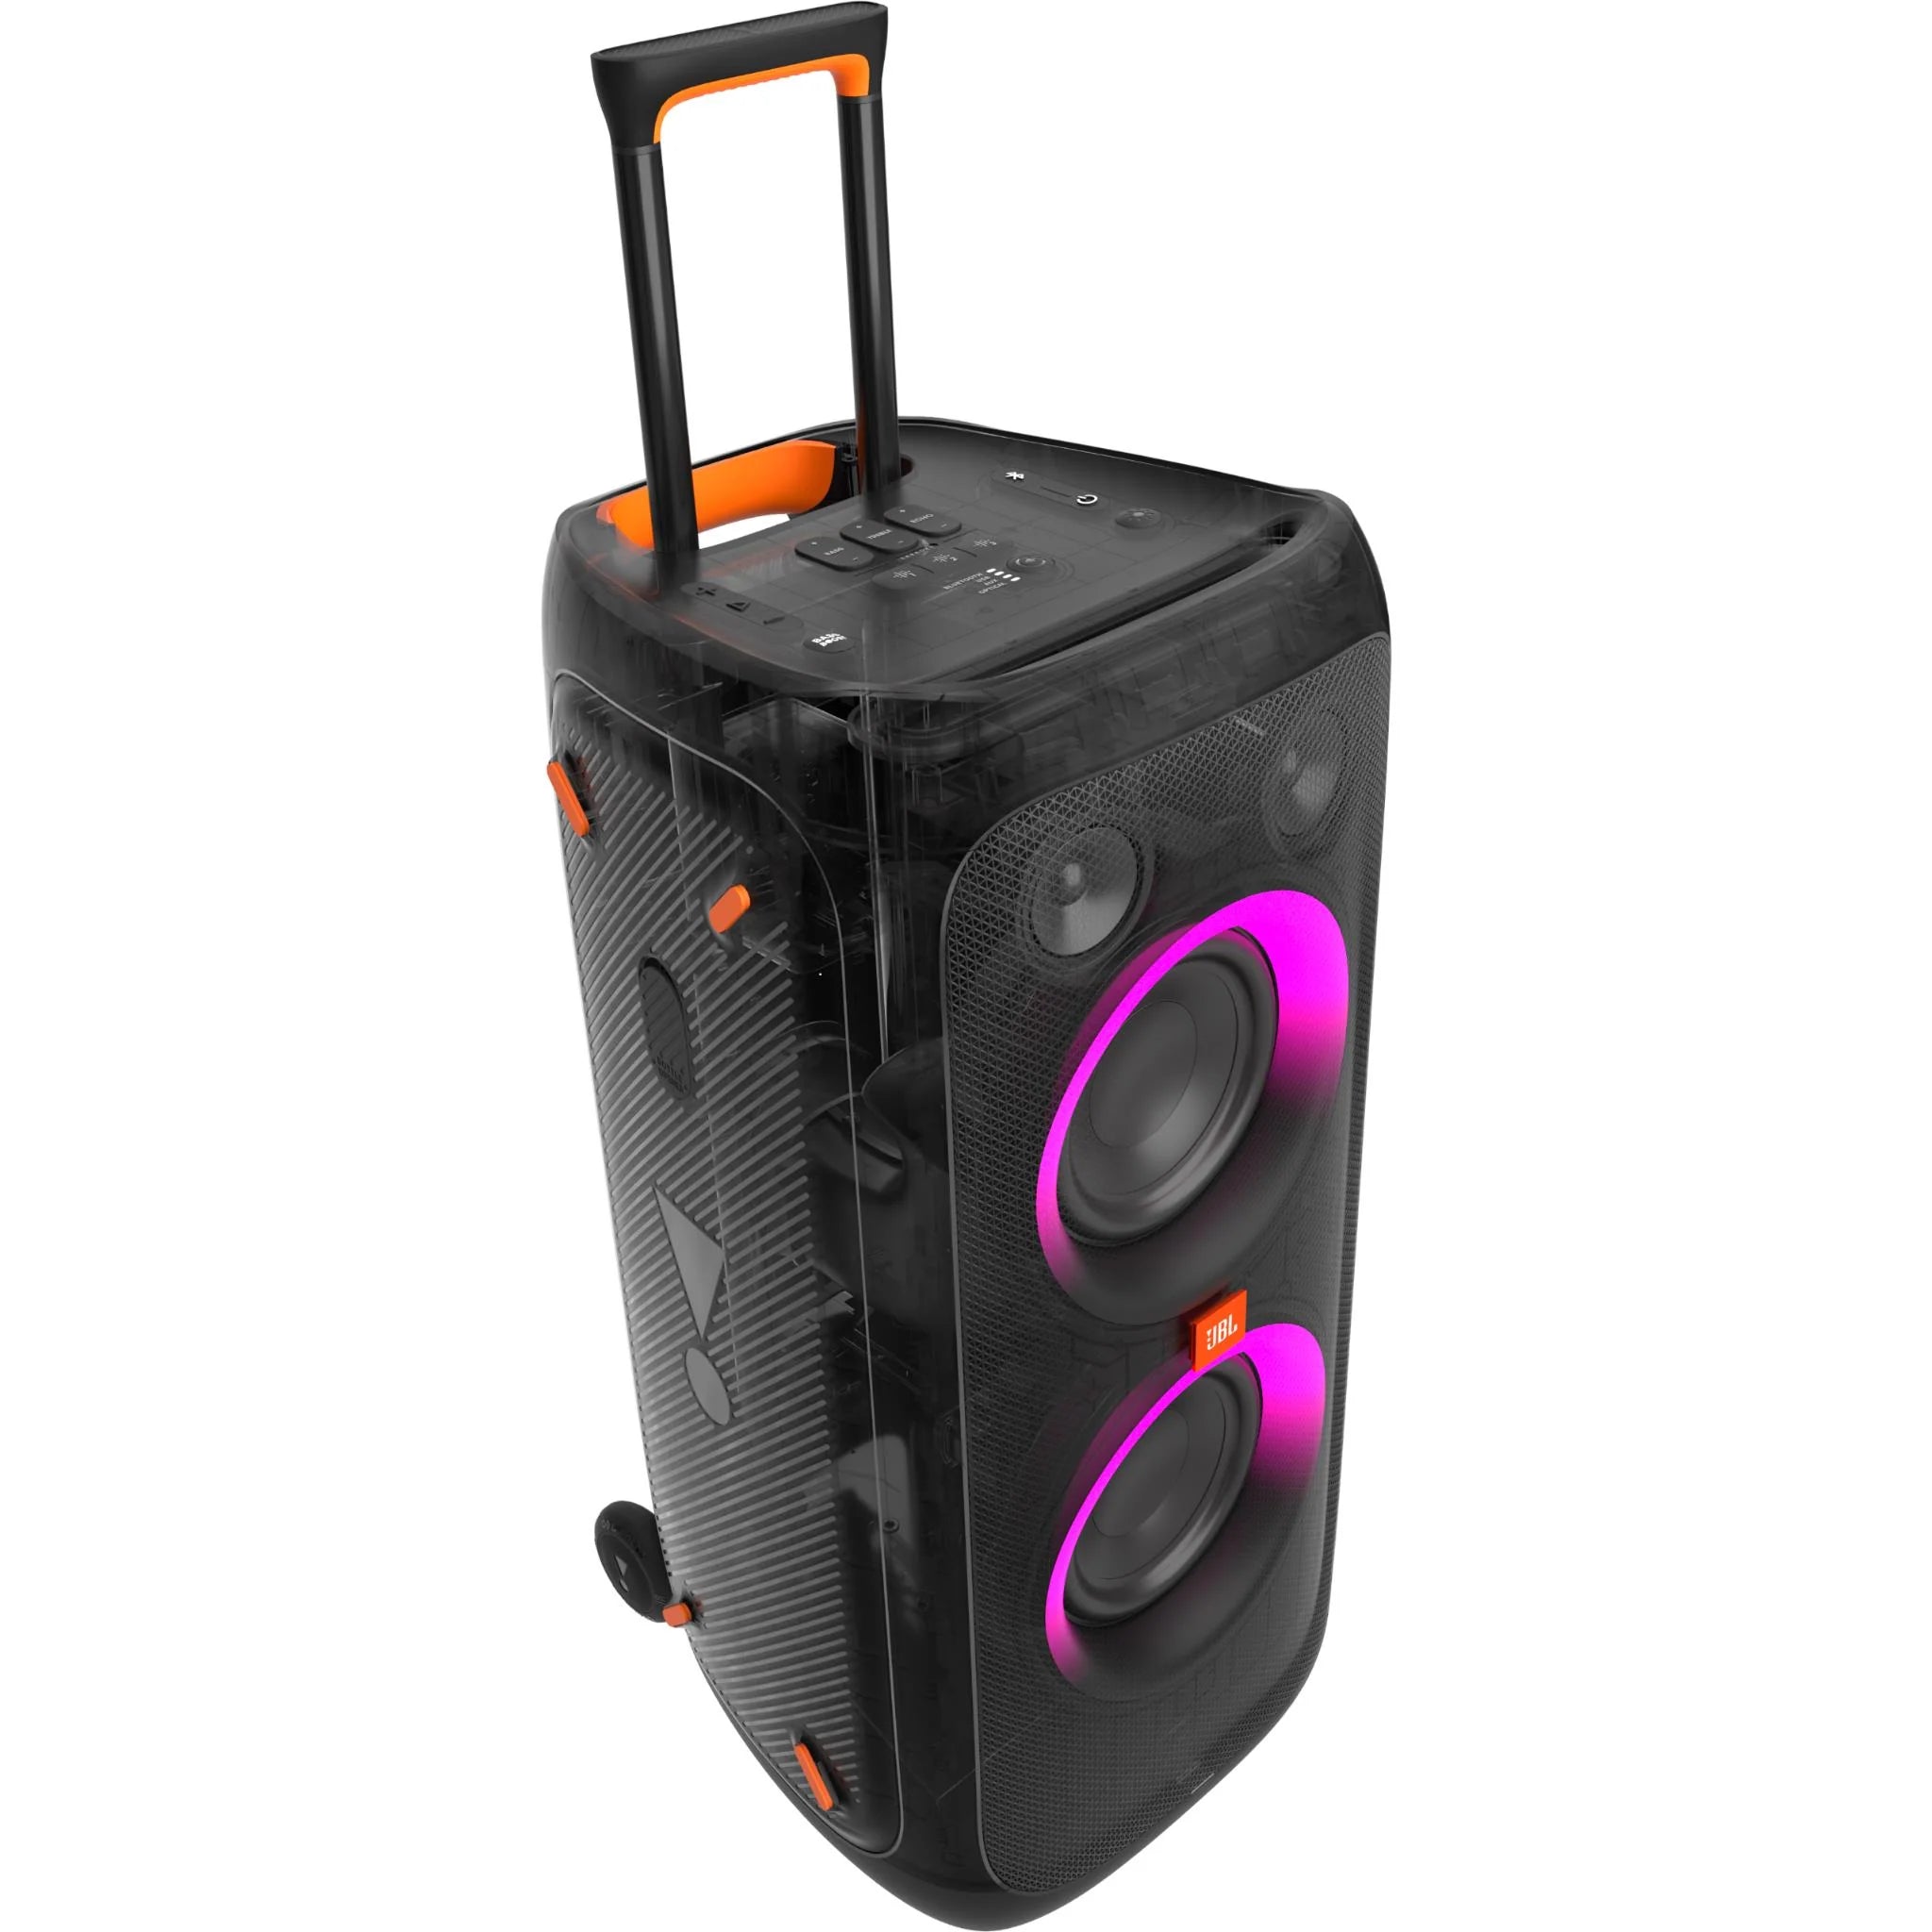 JBL PartyBox 310 Bluetooth Portable Speaker (Black)